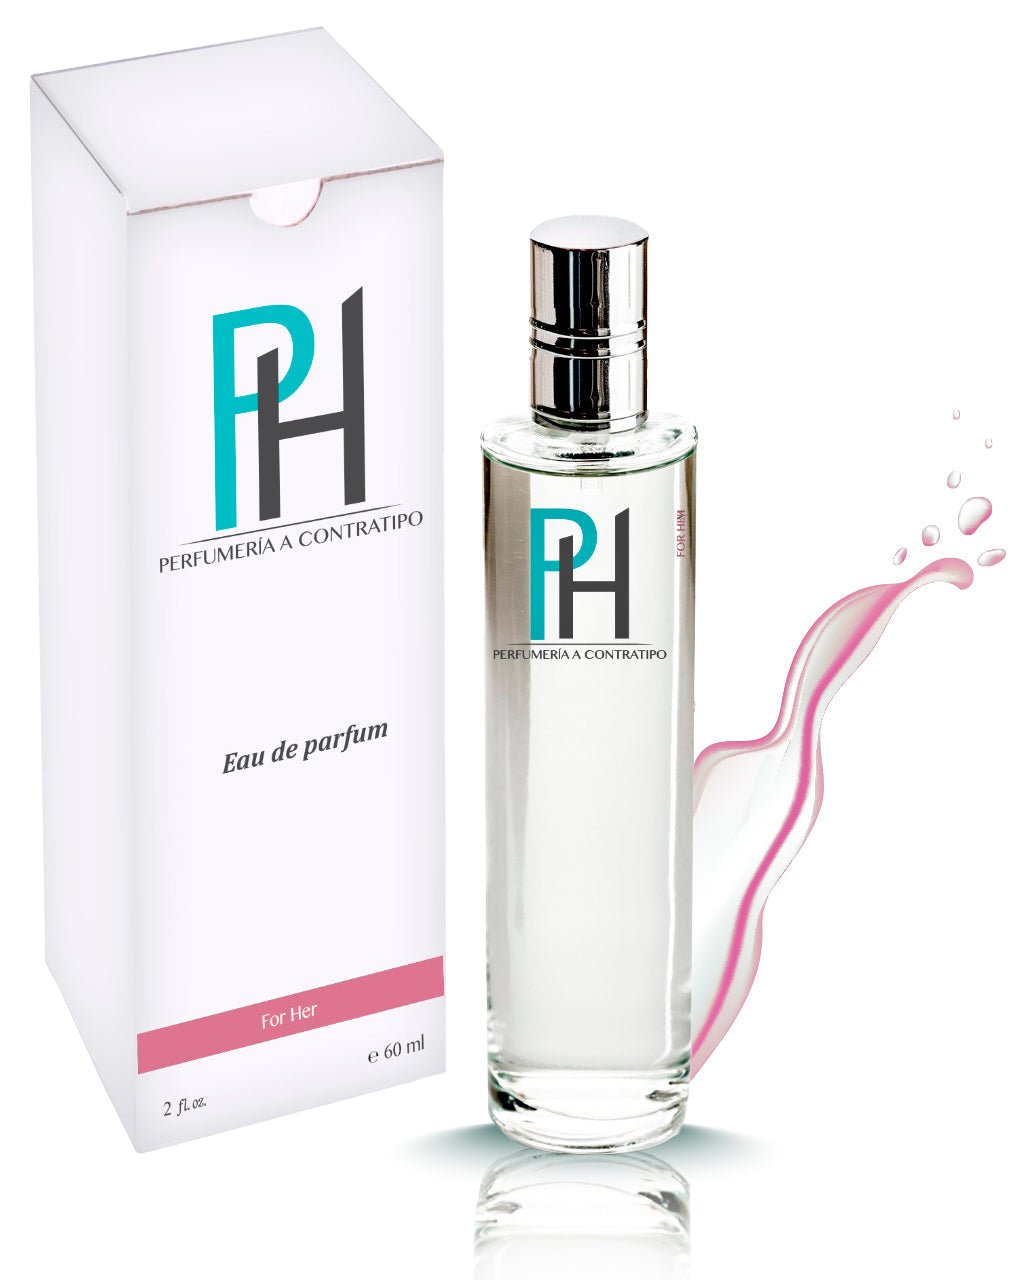 Perfume Manifesto Le Parfum De 60 ml - PH Perfumería a Contratipo